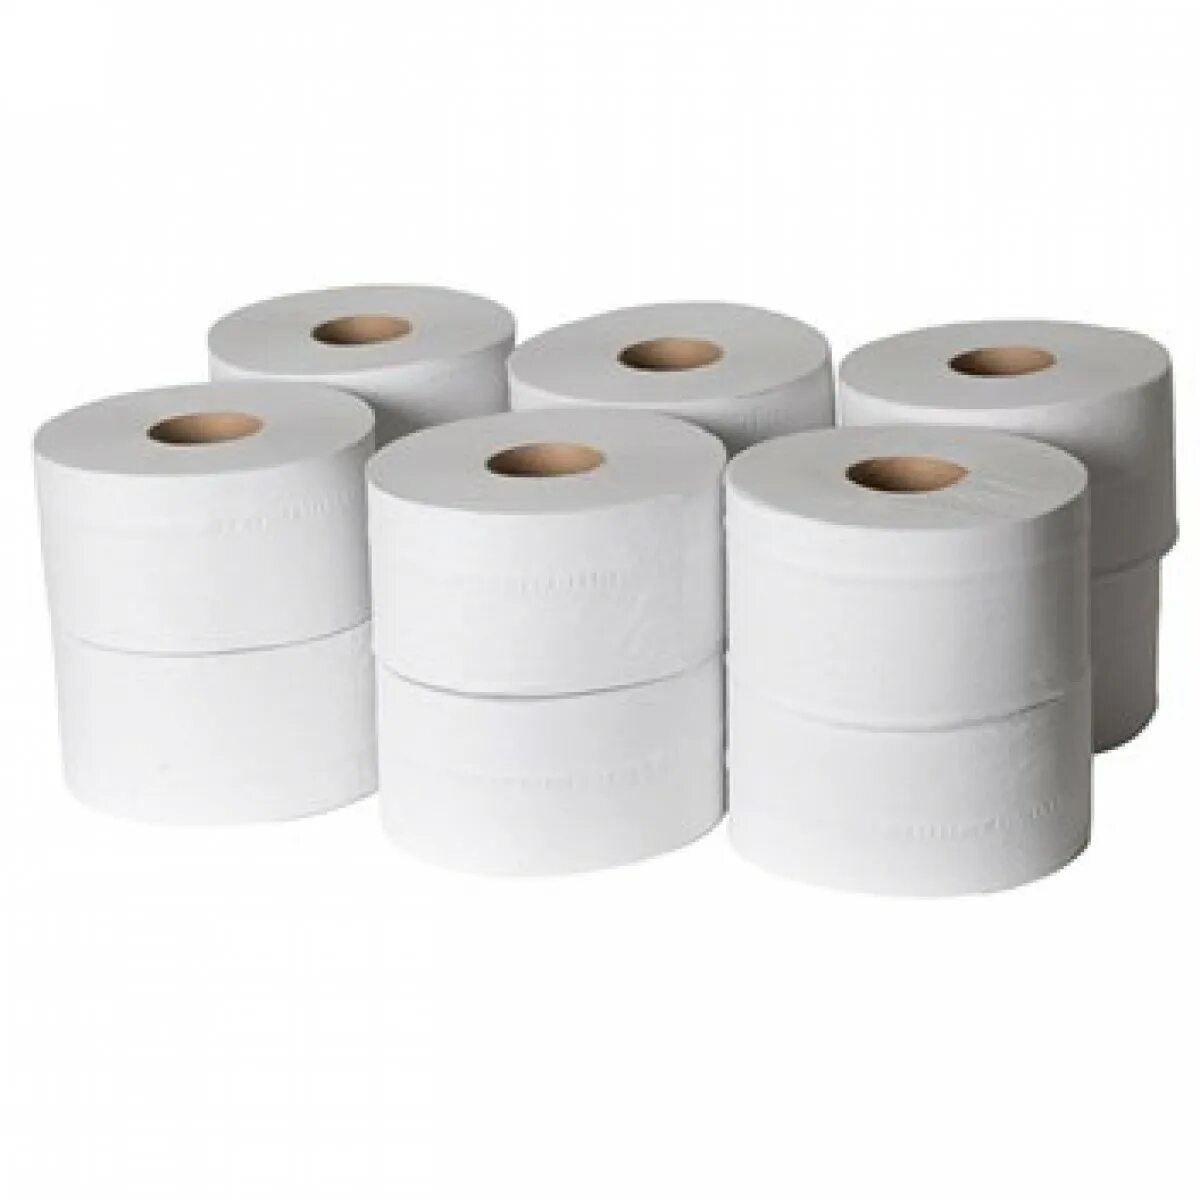 Туалетная бумага ТБ 1-200 NRB-210108 12рулонов/упаковка. 19002522 - Туалетная бумага 2-сл 25м (9,2*12,5) Целлюлоза,белый, 2сл. 48рул/уп. Фокус экономик бумага туалетная на втулке 2-слойная 16м белая.